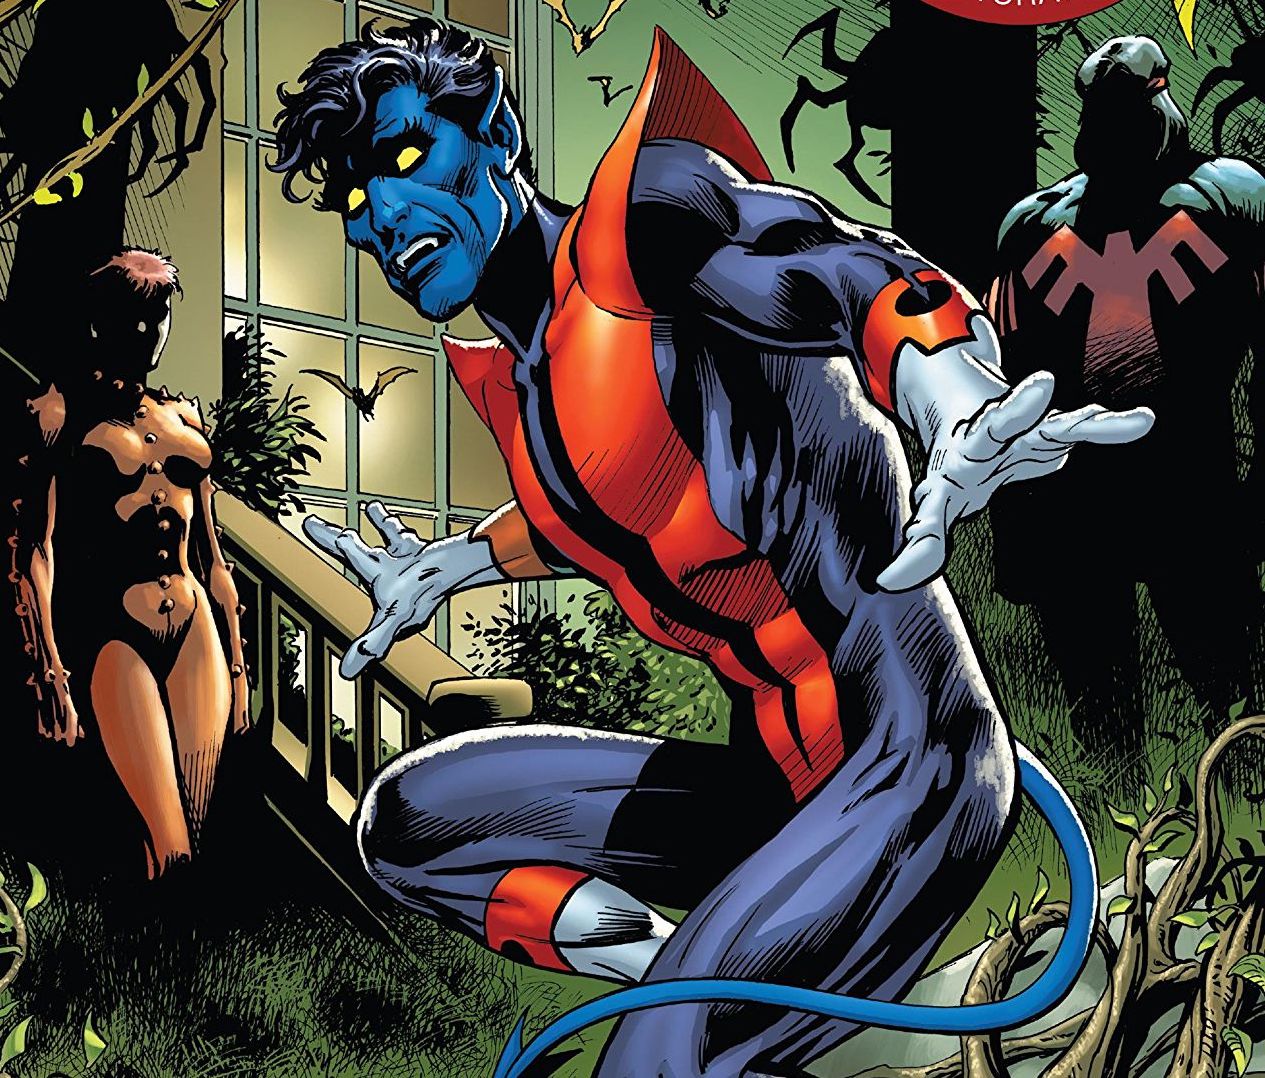 Giant-Size X-Men: Nightcrawler #1 Review